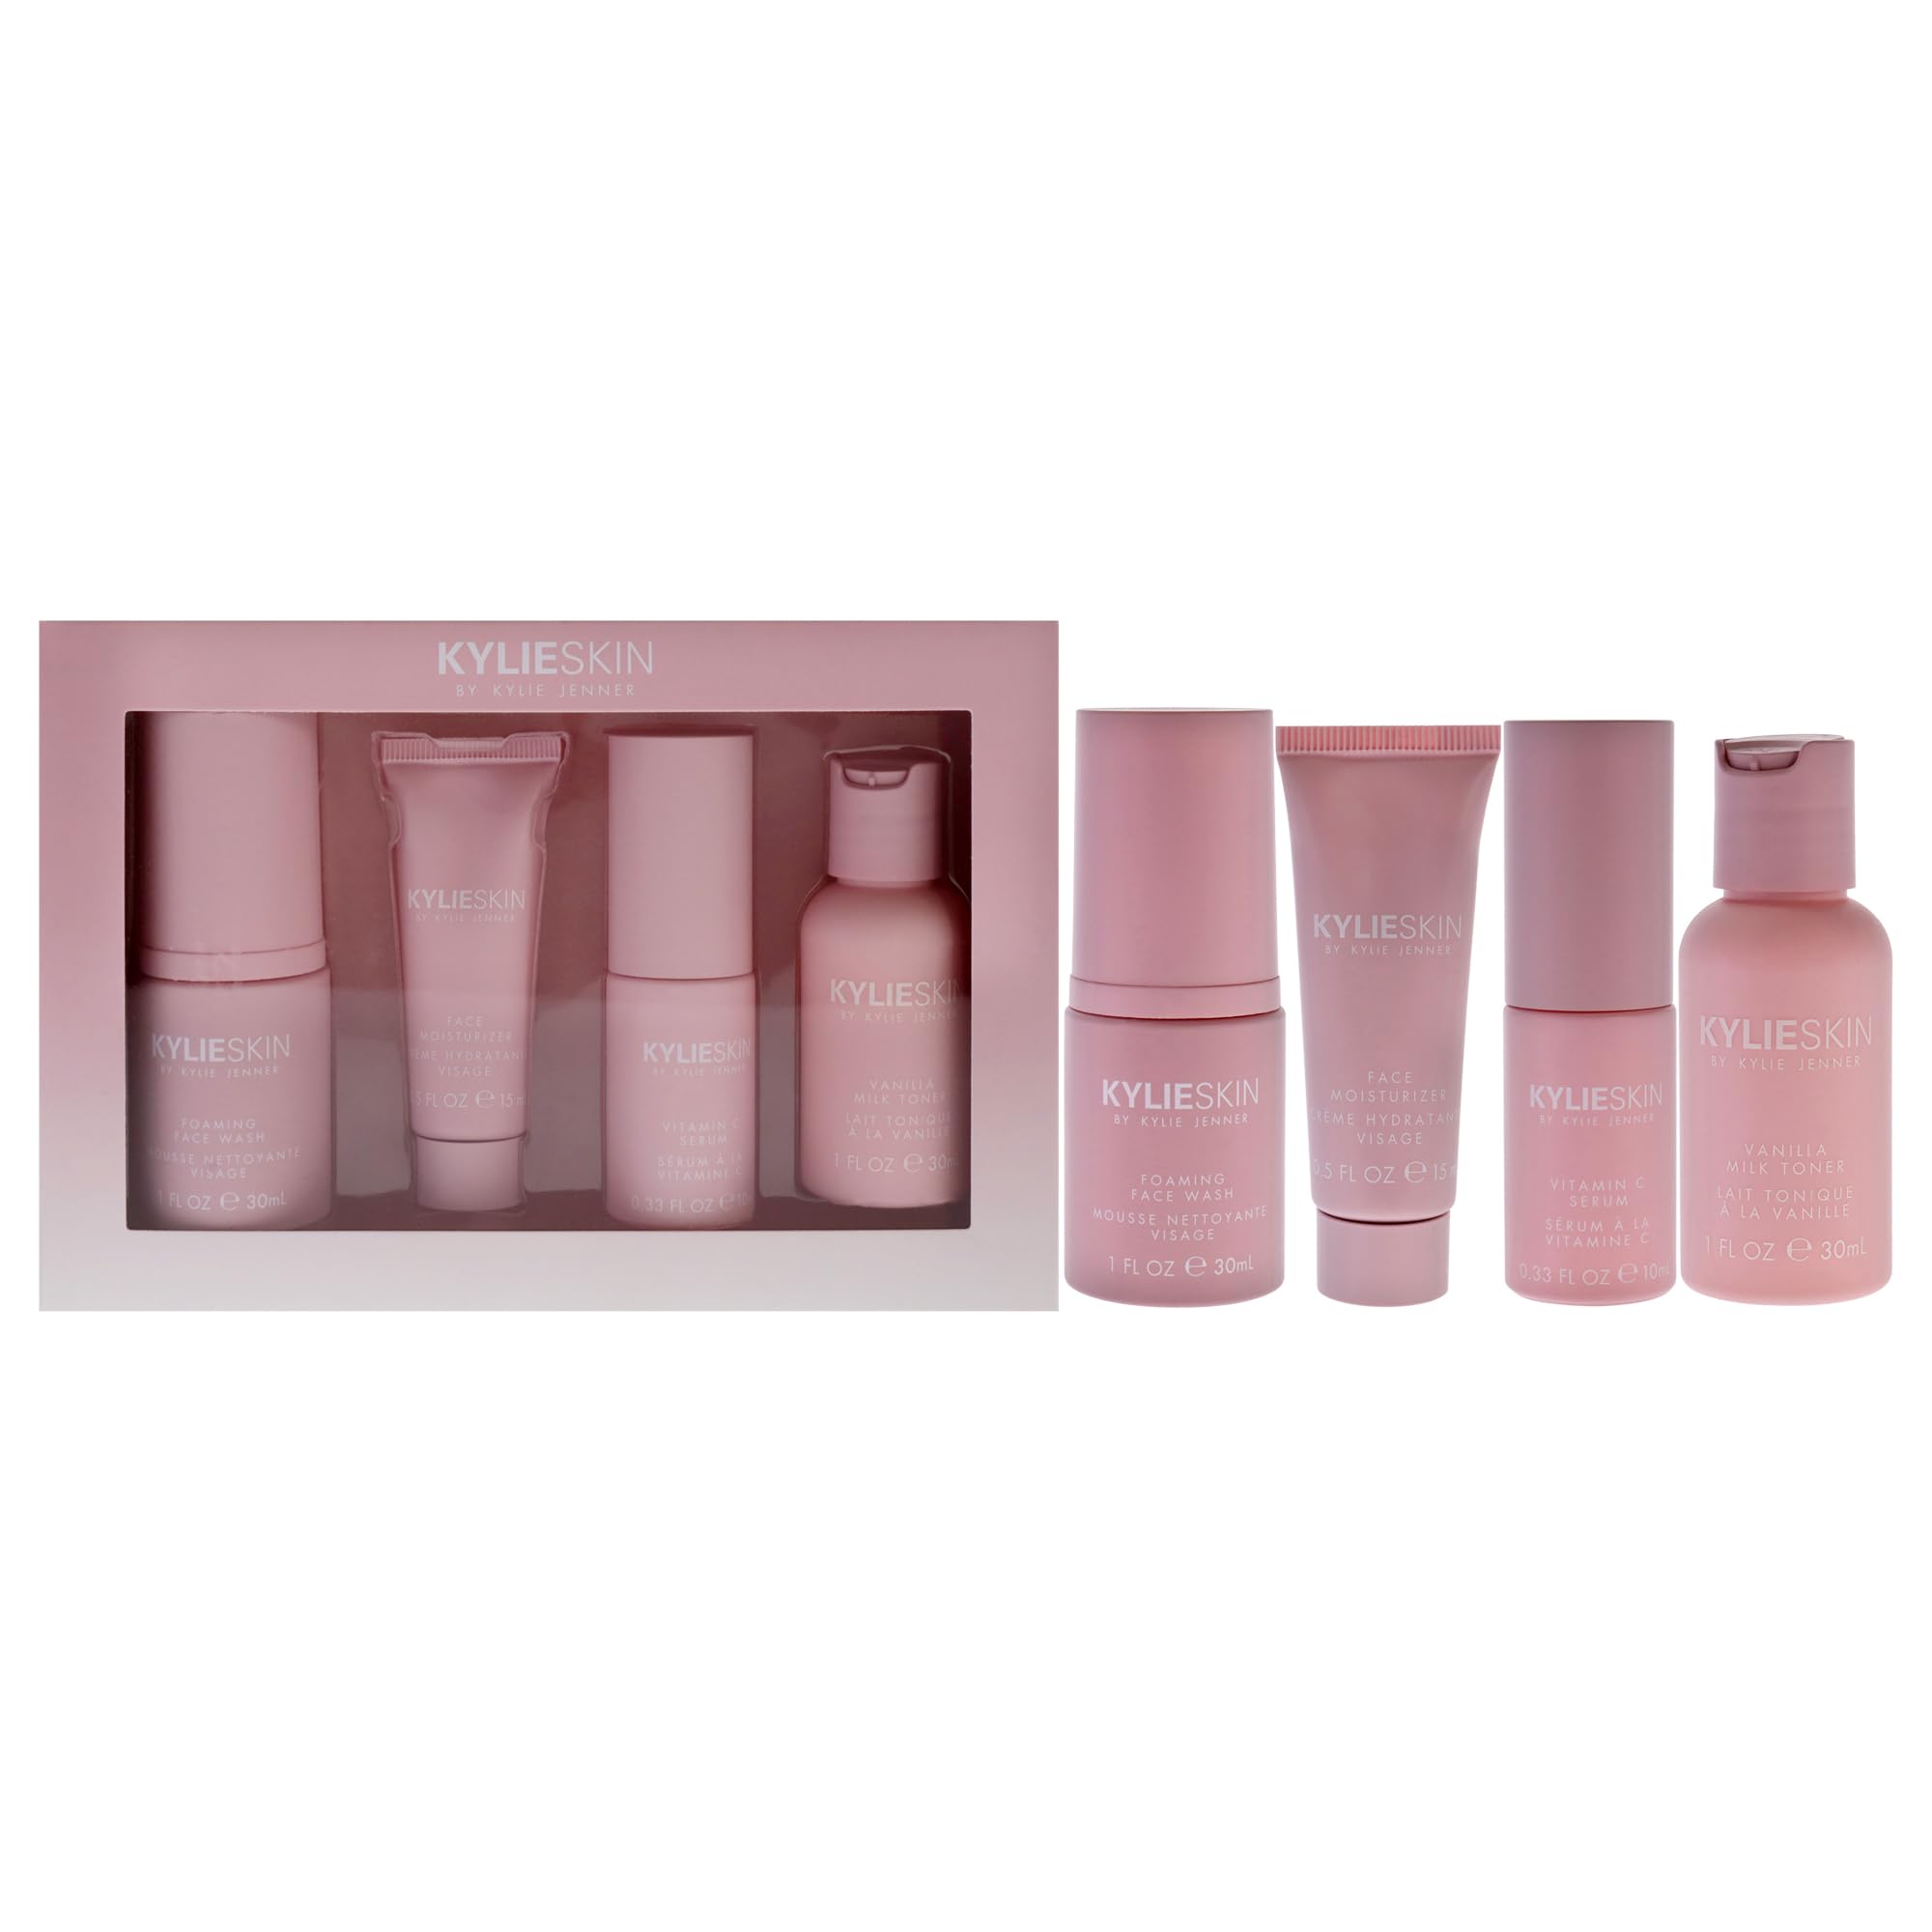 Skin Discovery Set by Kylie Cosmetics for Women - 4 Pc 1 oz Foaming Face Wash, 0.5 oz Face Moisturizer, 0.3 oz Vitamin C Serum, 1 oz Vanilla Milk Toner